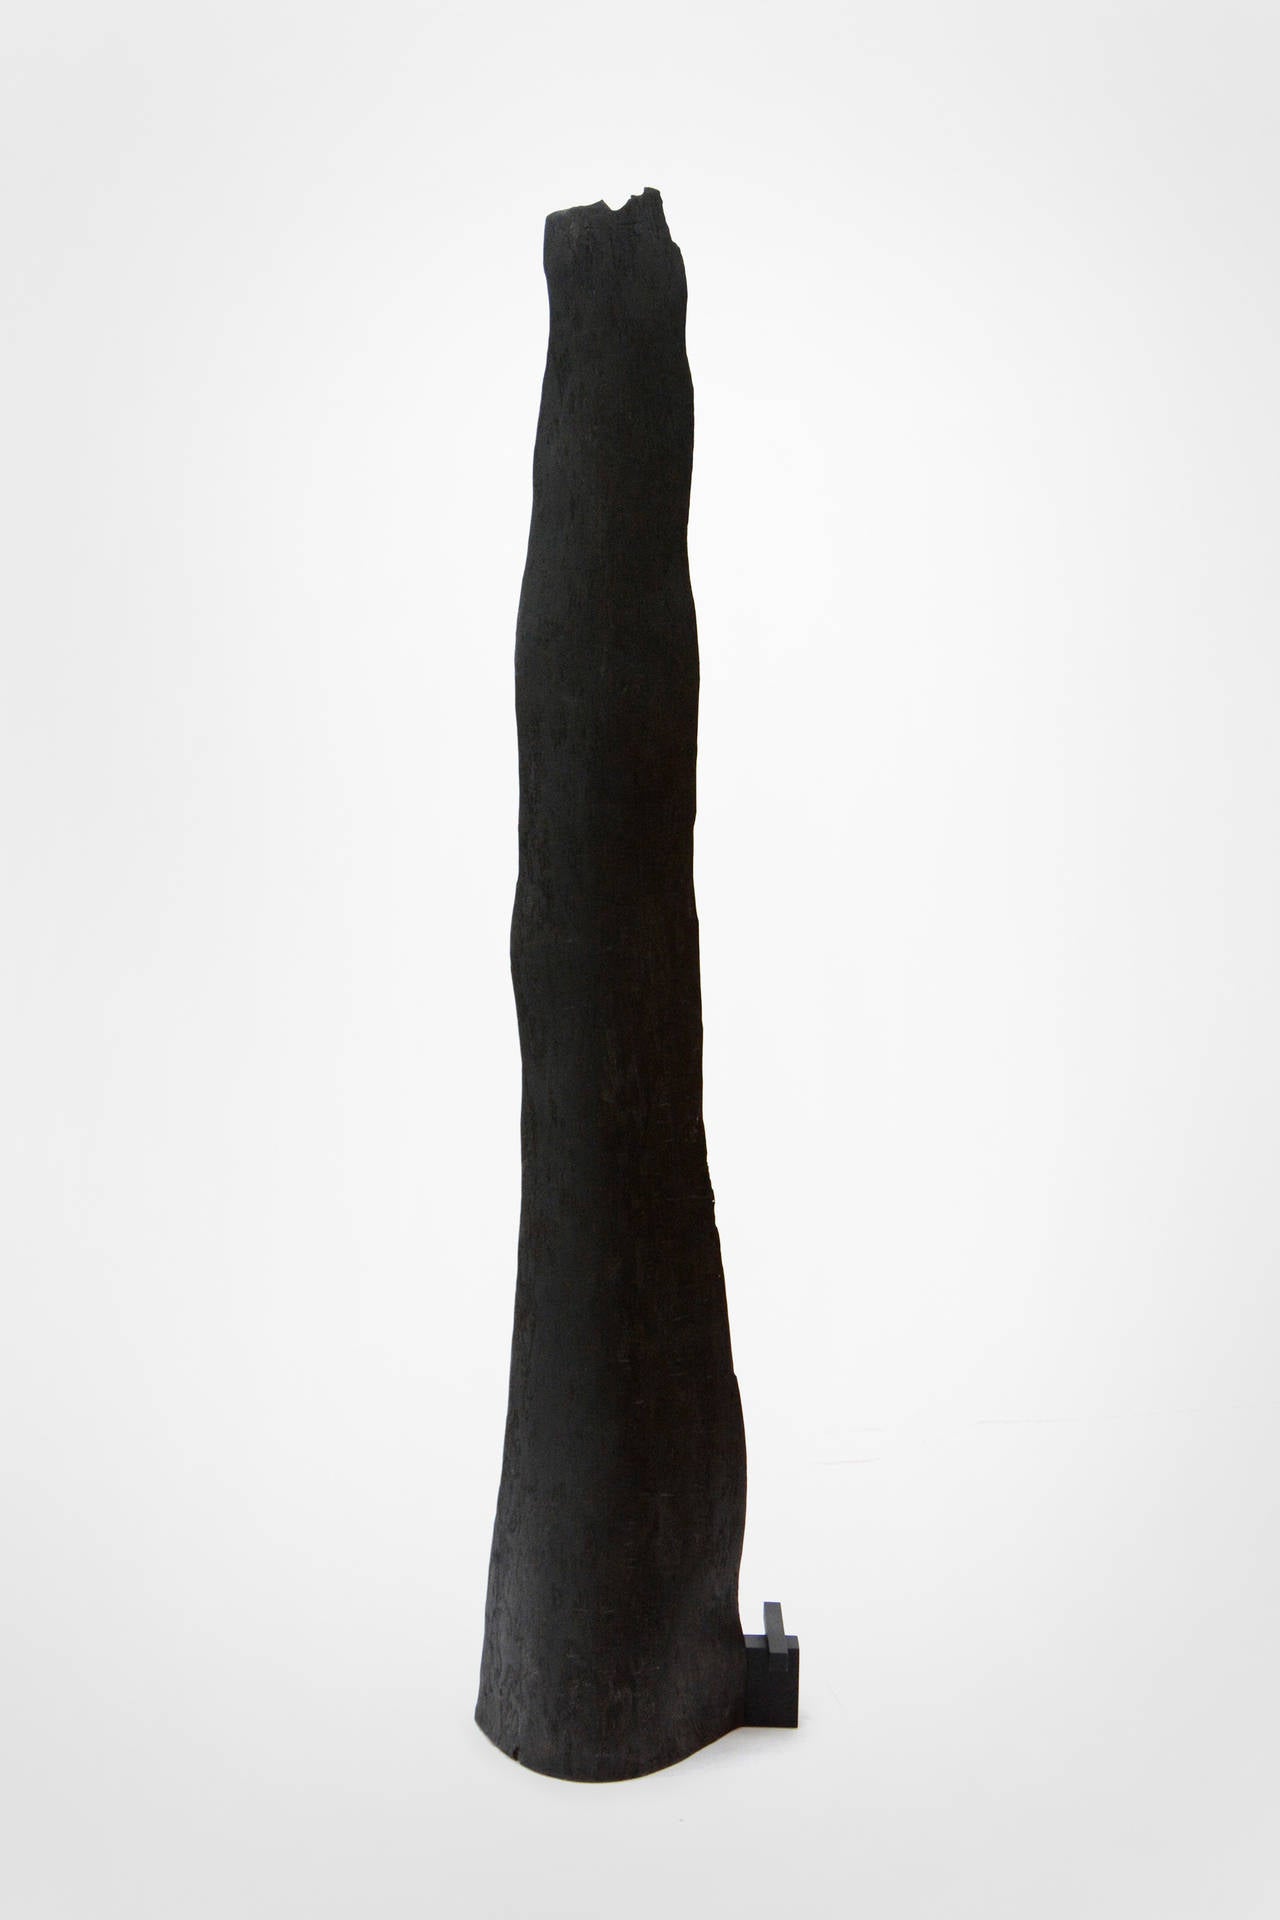 Refuge - tall, dynamic, dark, modern, contemporary, abstract, wooden sculpture - Contemporary Sculpture by Edward Falkenberg